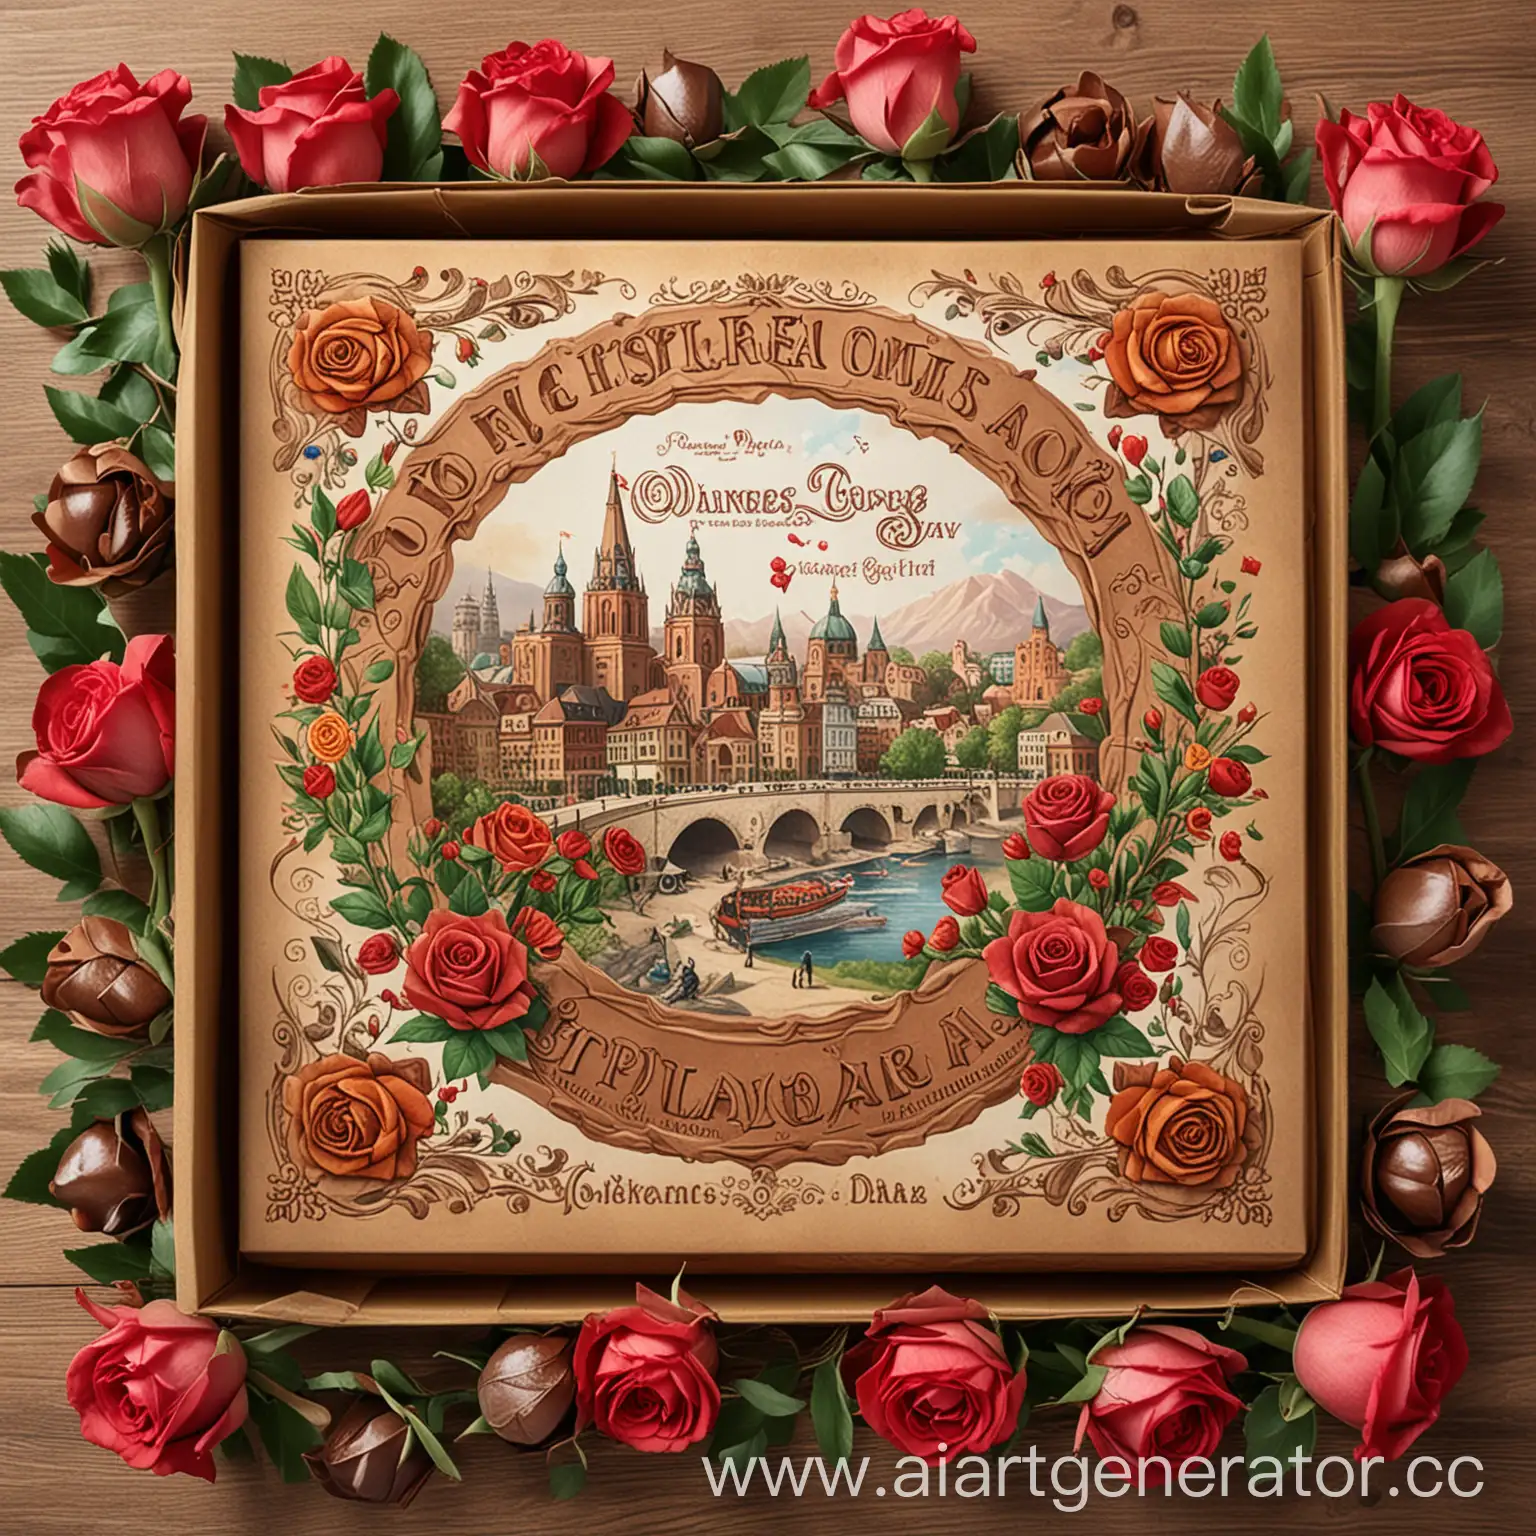 Holiday-Celebration-Donetsk-City-Chocolates-with-Roses-and-Terrilops